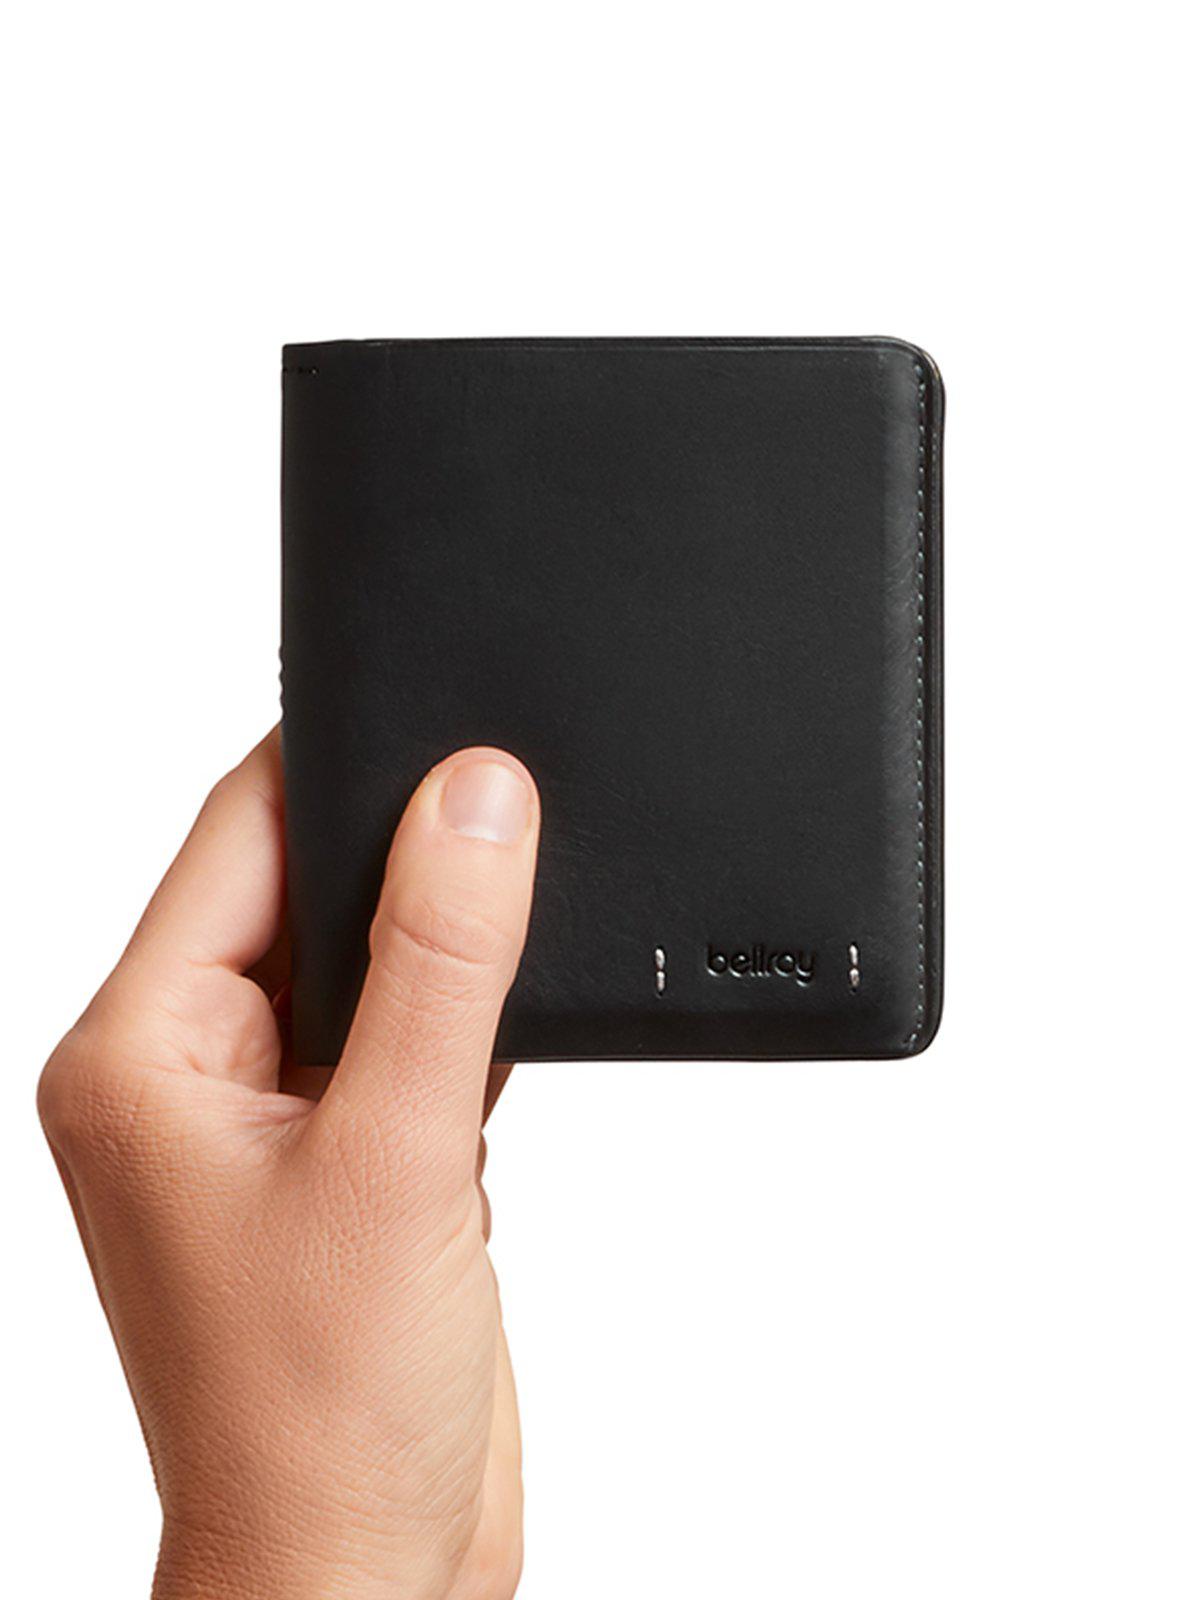 Bellroy Note Sleeve Wallet Premium Edition Black RFID